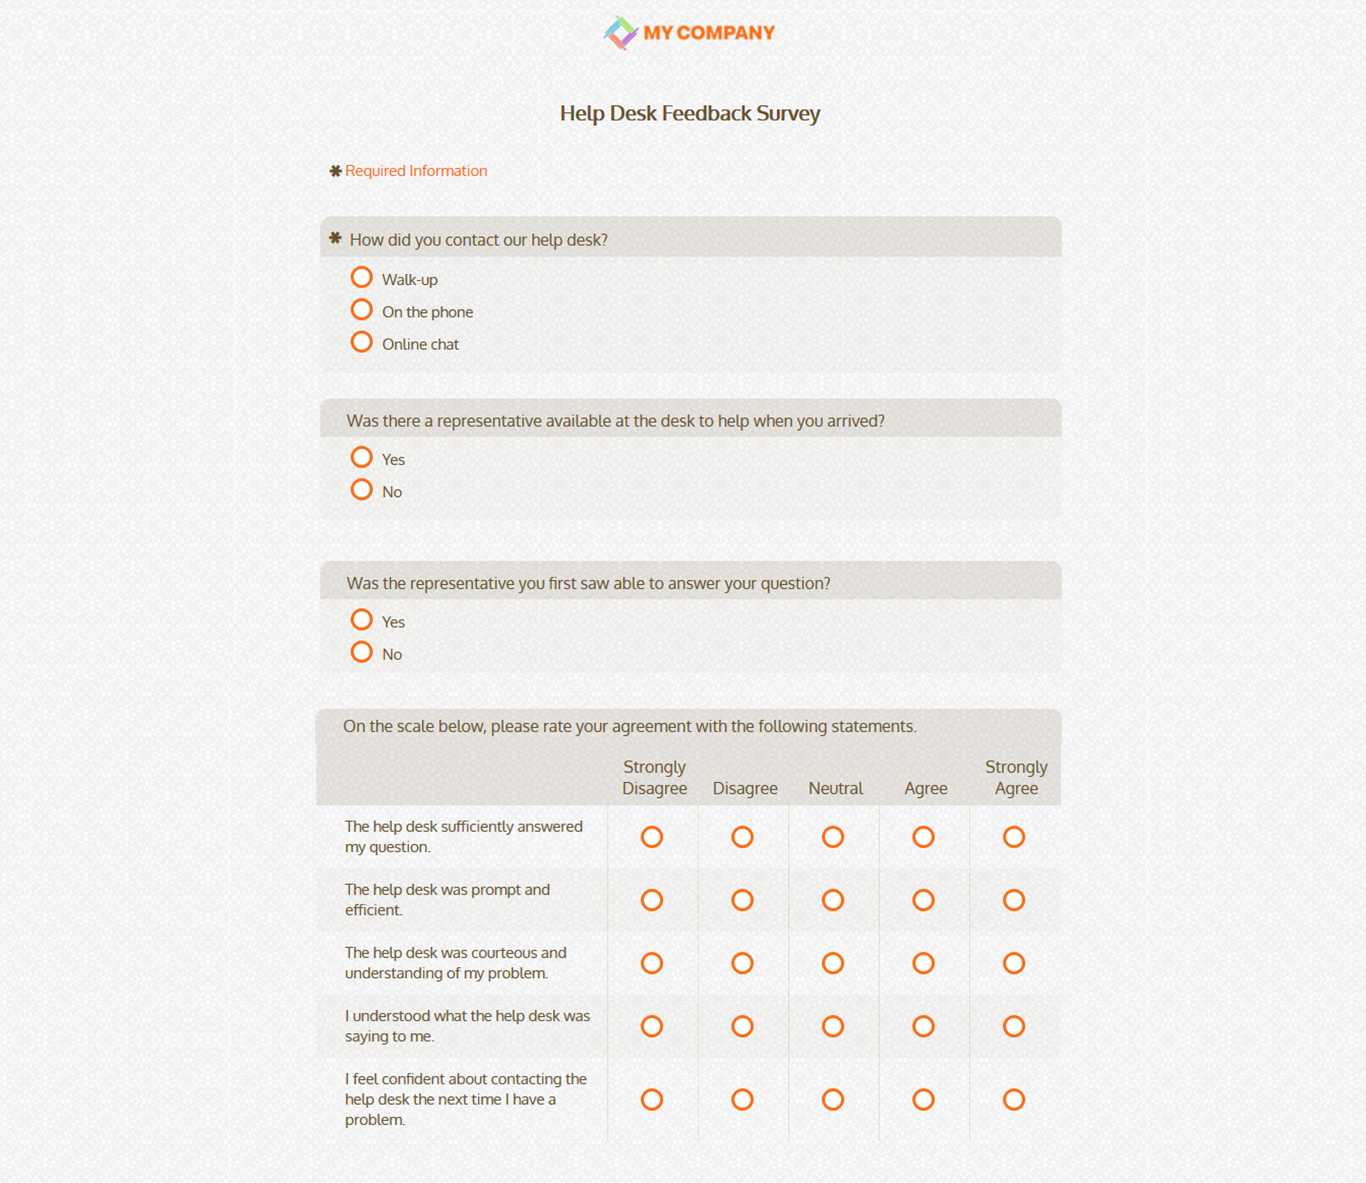 Help Desk Feedback Survey Template [13 Questions] | Sogosurvey With Regard To Survey Card Template